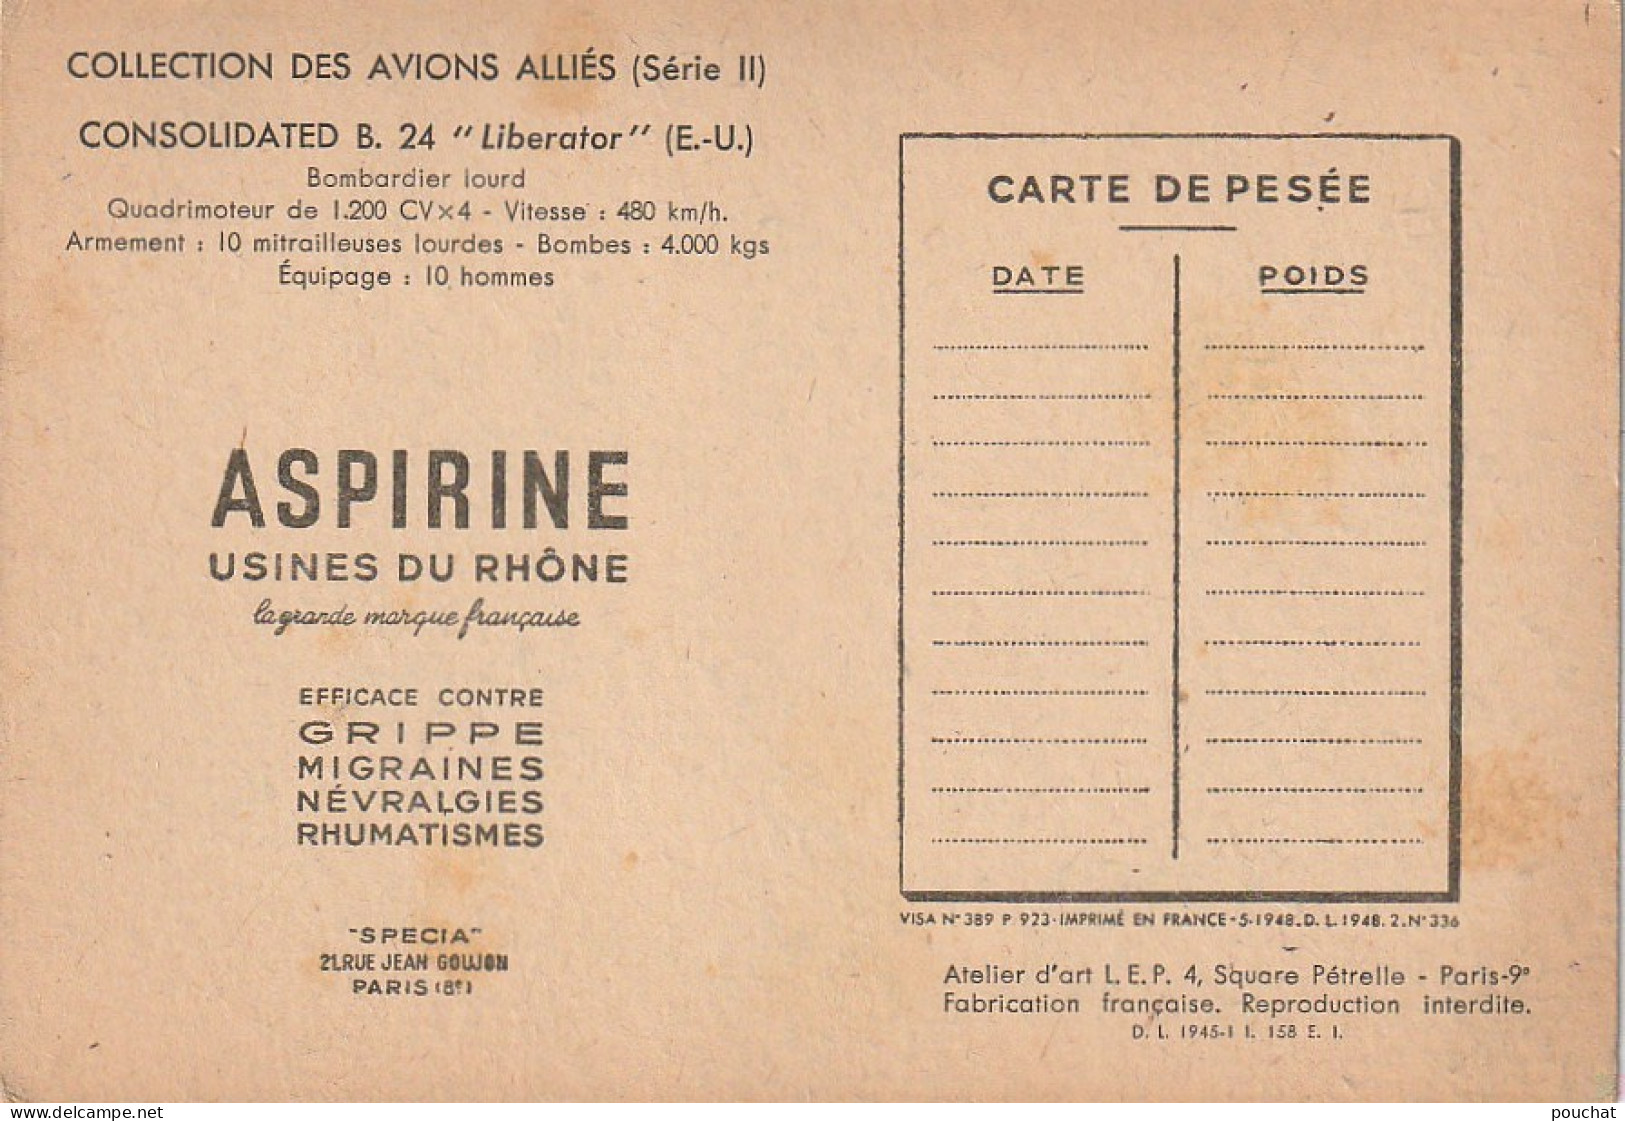 QU 21- COLLECTION DES AVIONS ALLIES - CONSOLIDATED B 24 " LBERATOR " (E.U) - ILLUSTRATEUR PETIT - CARTE PUB ASPIRINE  - 1939-1945: 2nd War